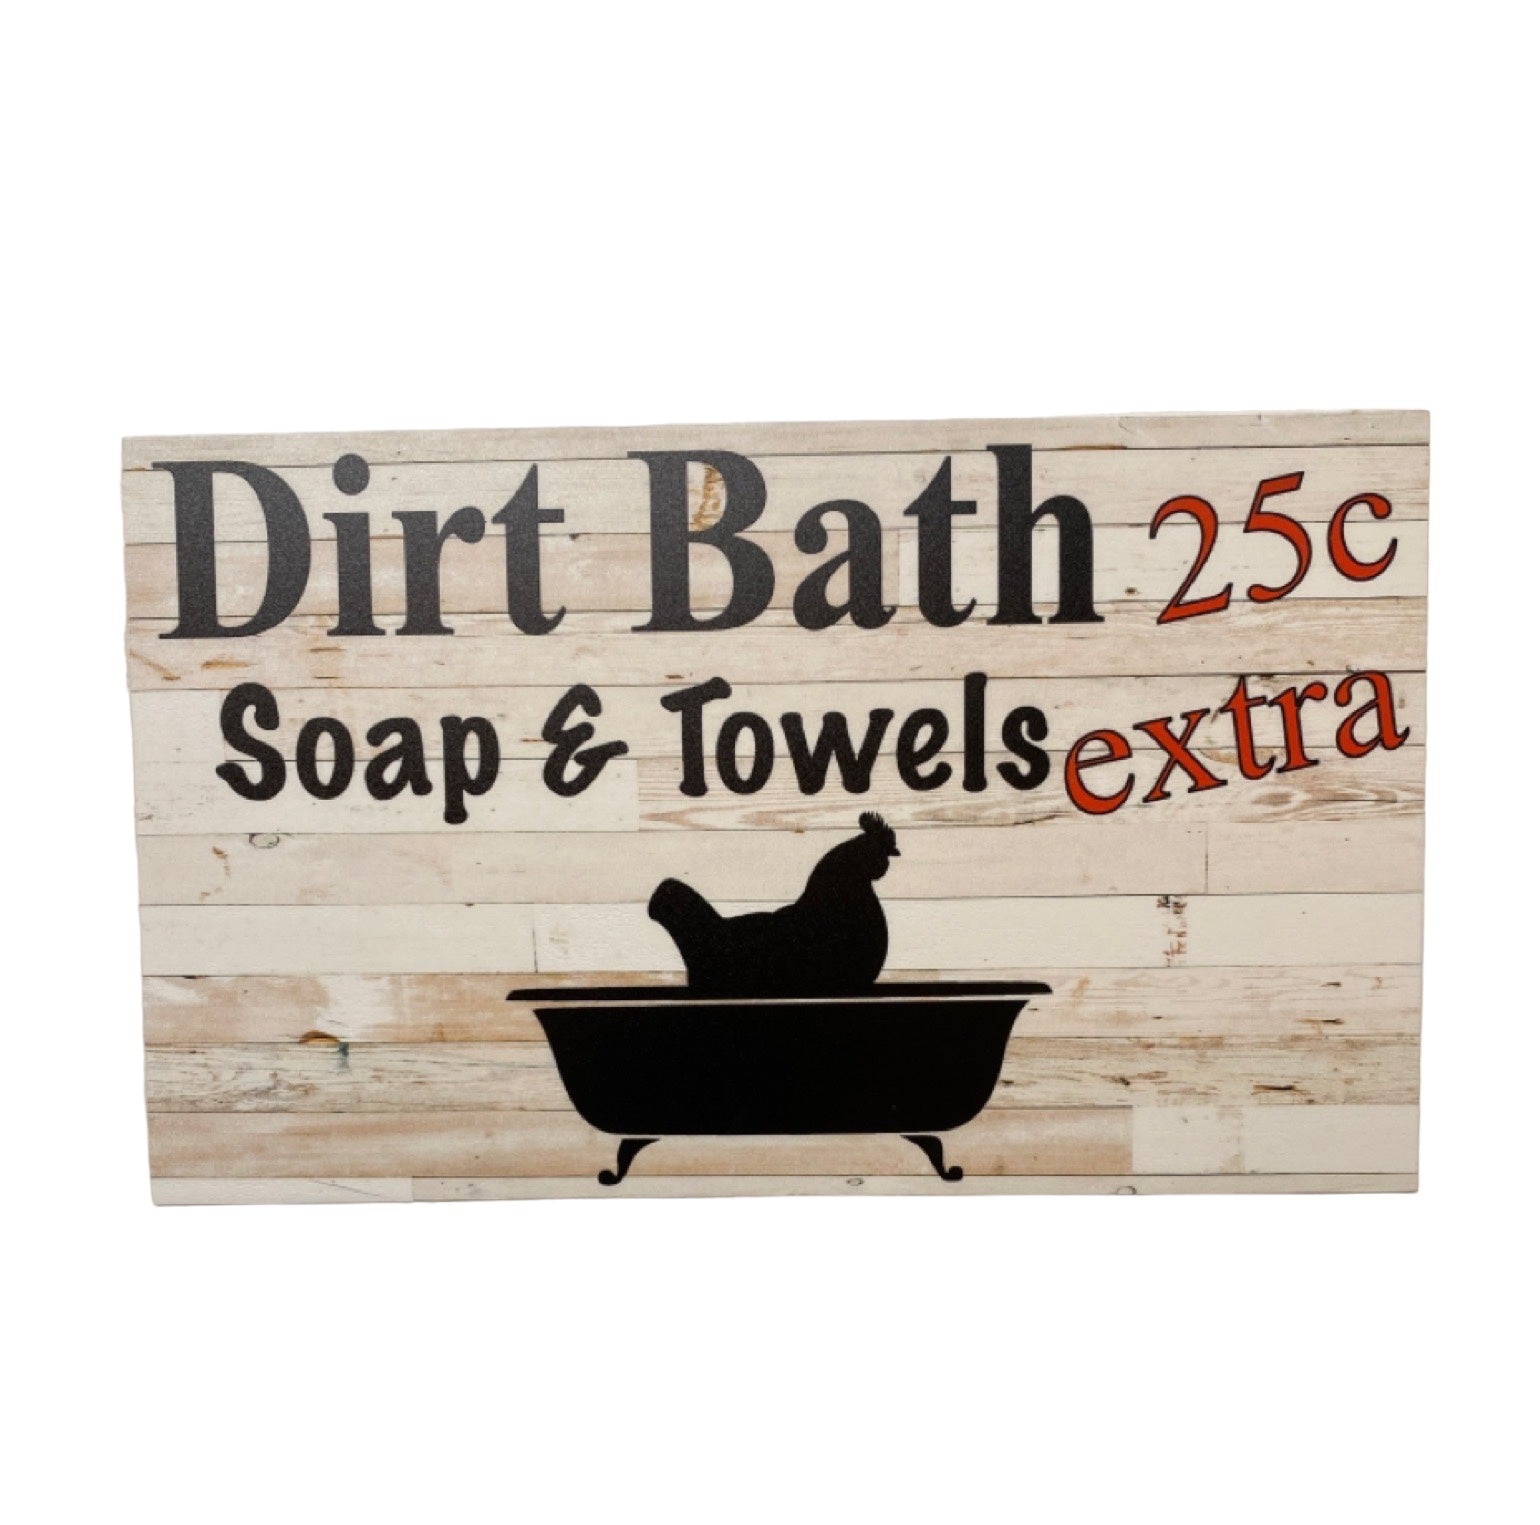 Chicken Dirt Bath Bathroom Sign - The Renmy Store Homewares & Gifts 